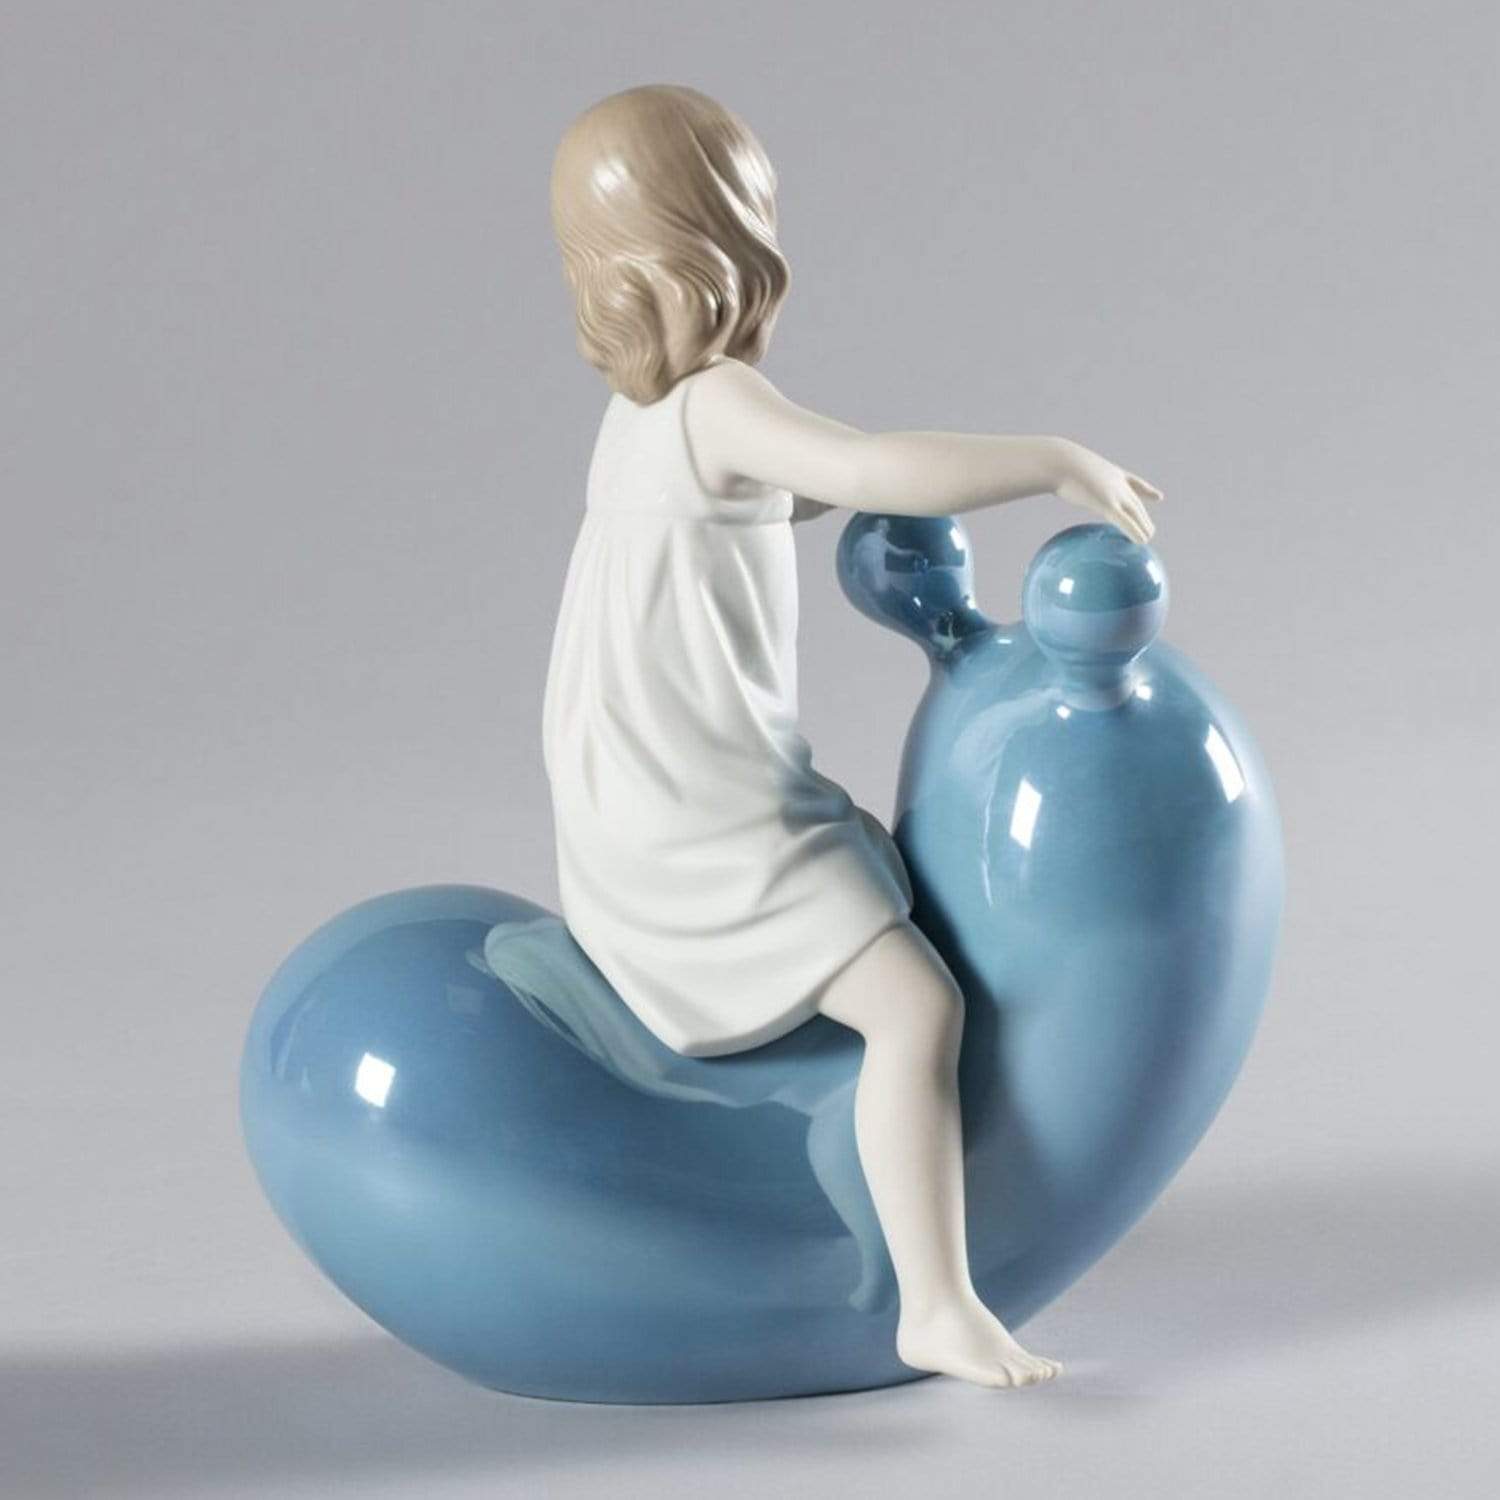 Lladro بلدي المنشار بالون فتاة التمثال - الأزرق والأبيض - 1009368 - Jashanmal الرئيسية